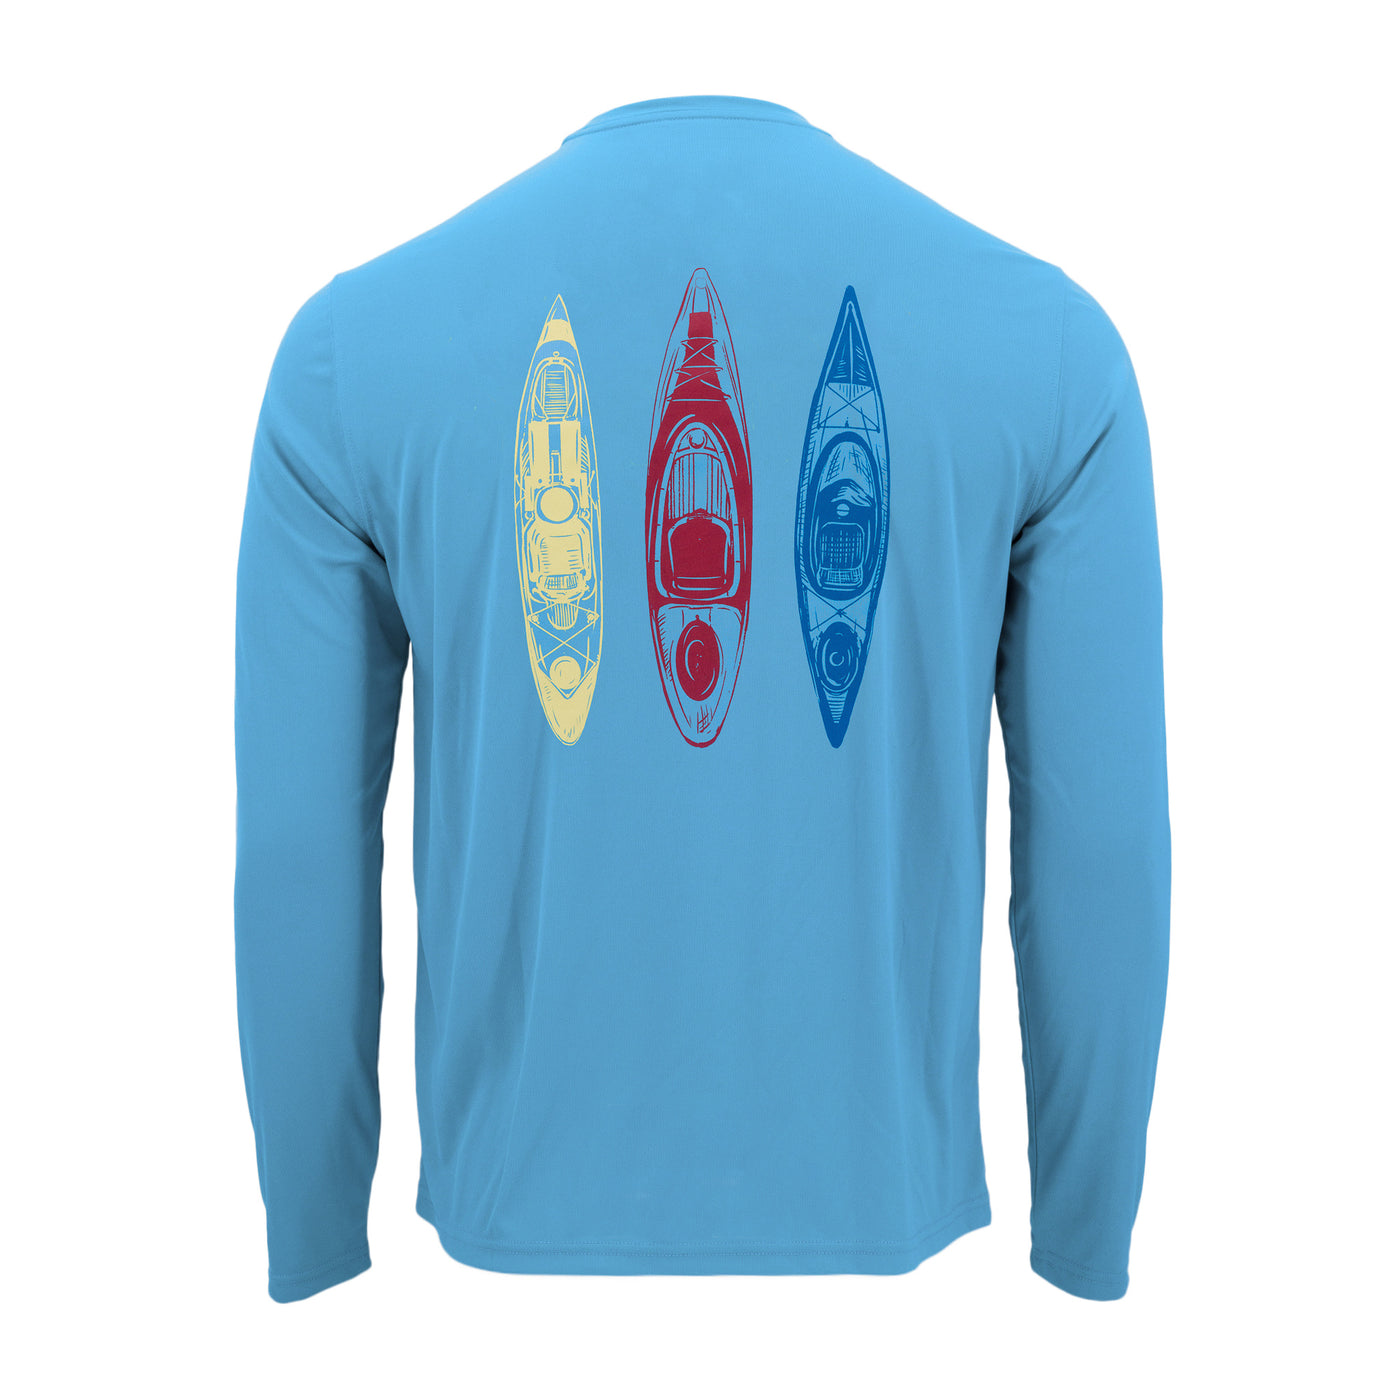 Long sleeve UPF protection 50 sun tee shirt #color_kayak-ethereal-blue